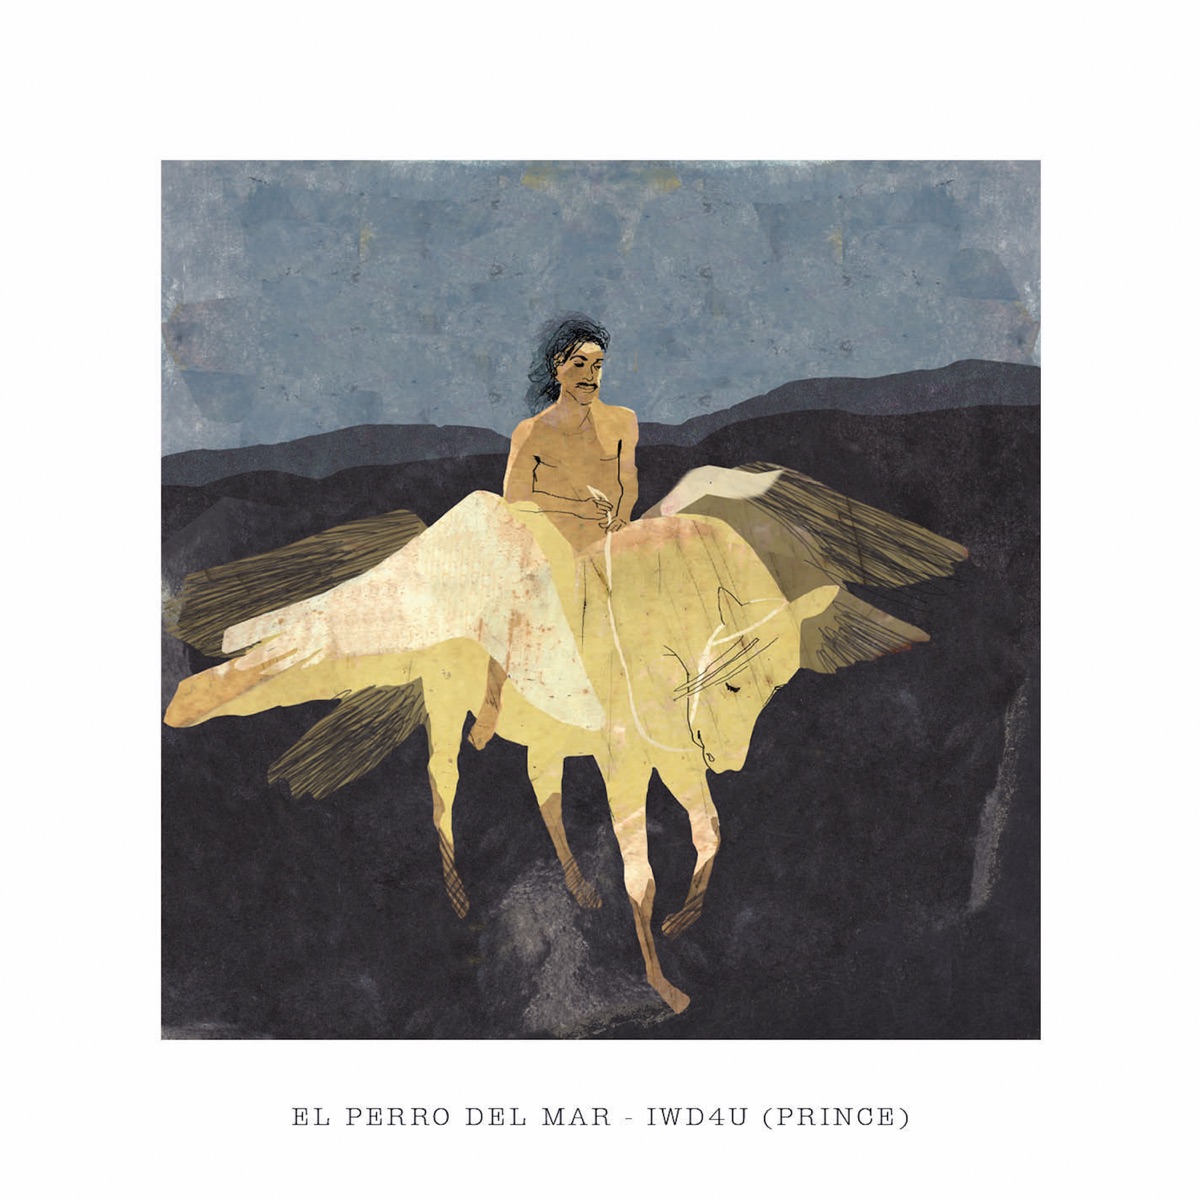 We Are History - EP by El Perro del Mar on Apple Music